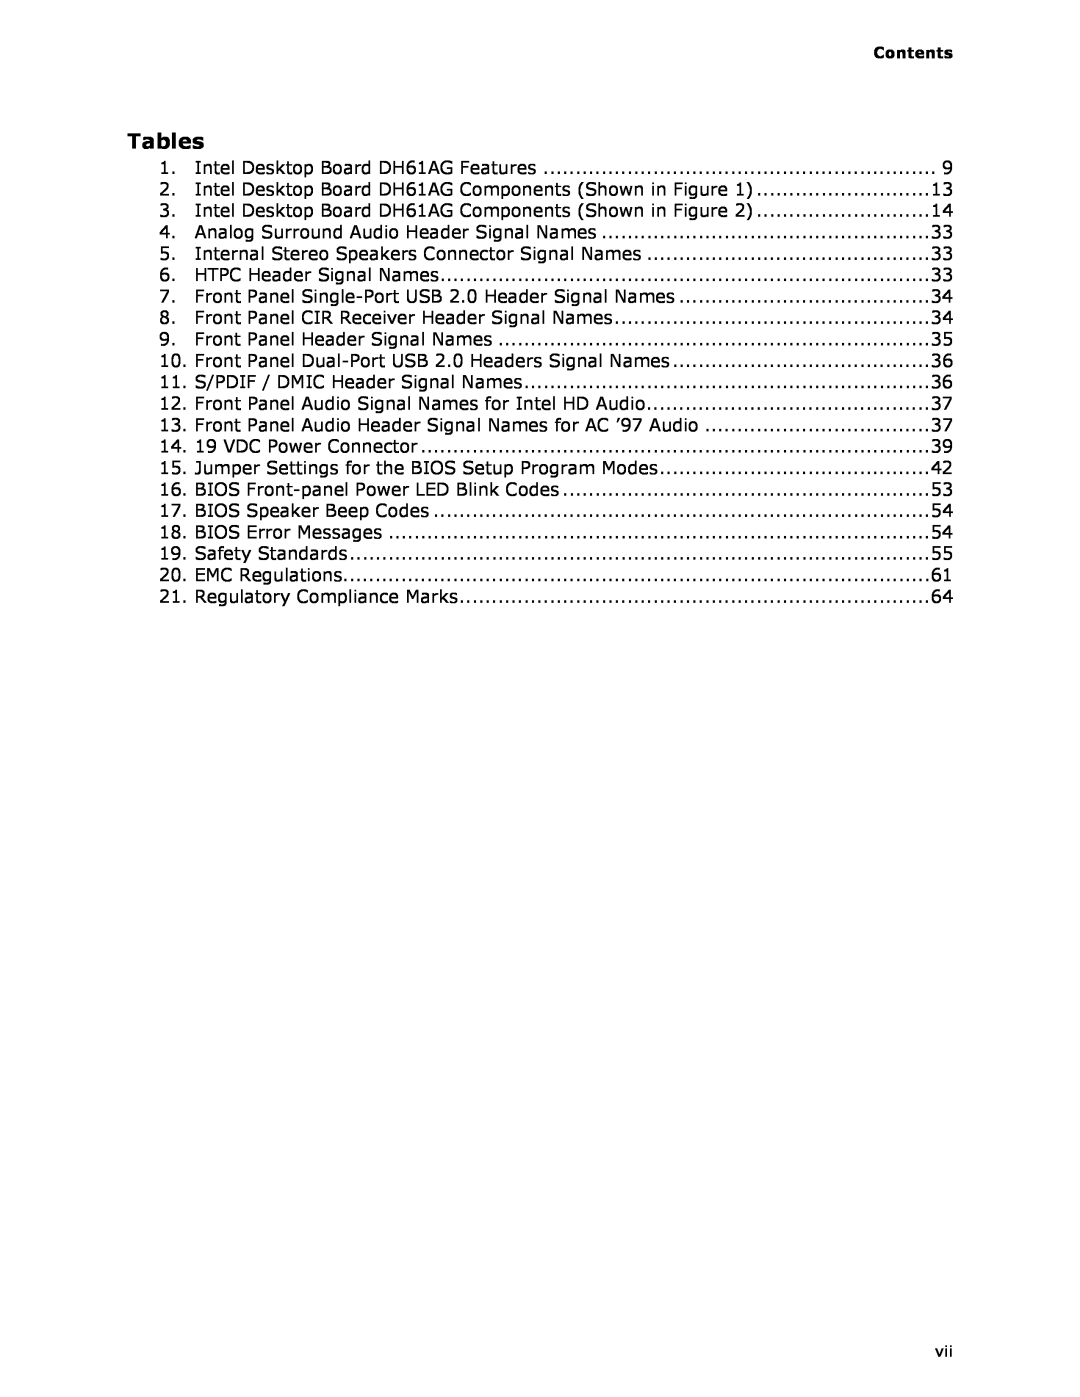 Intel BOXDH61AG manual Tables, Contents 